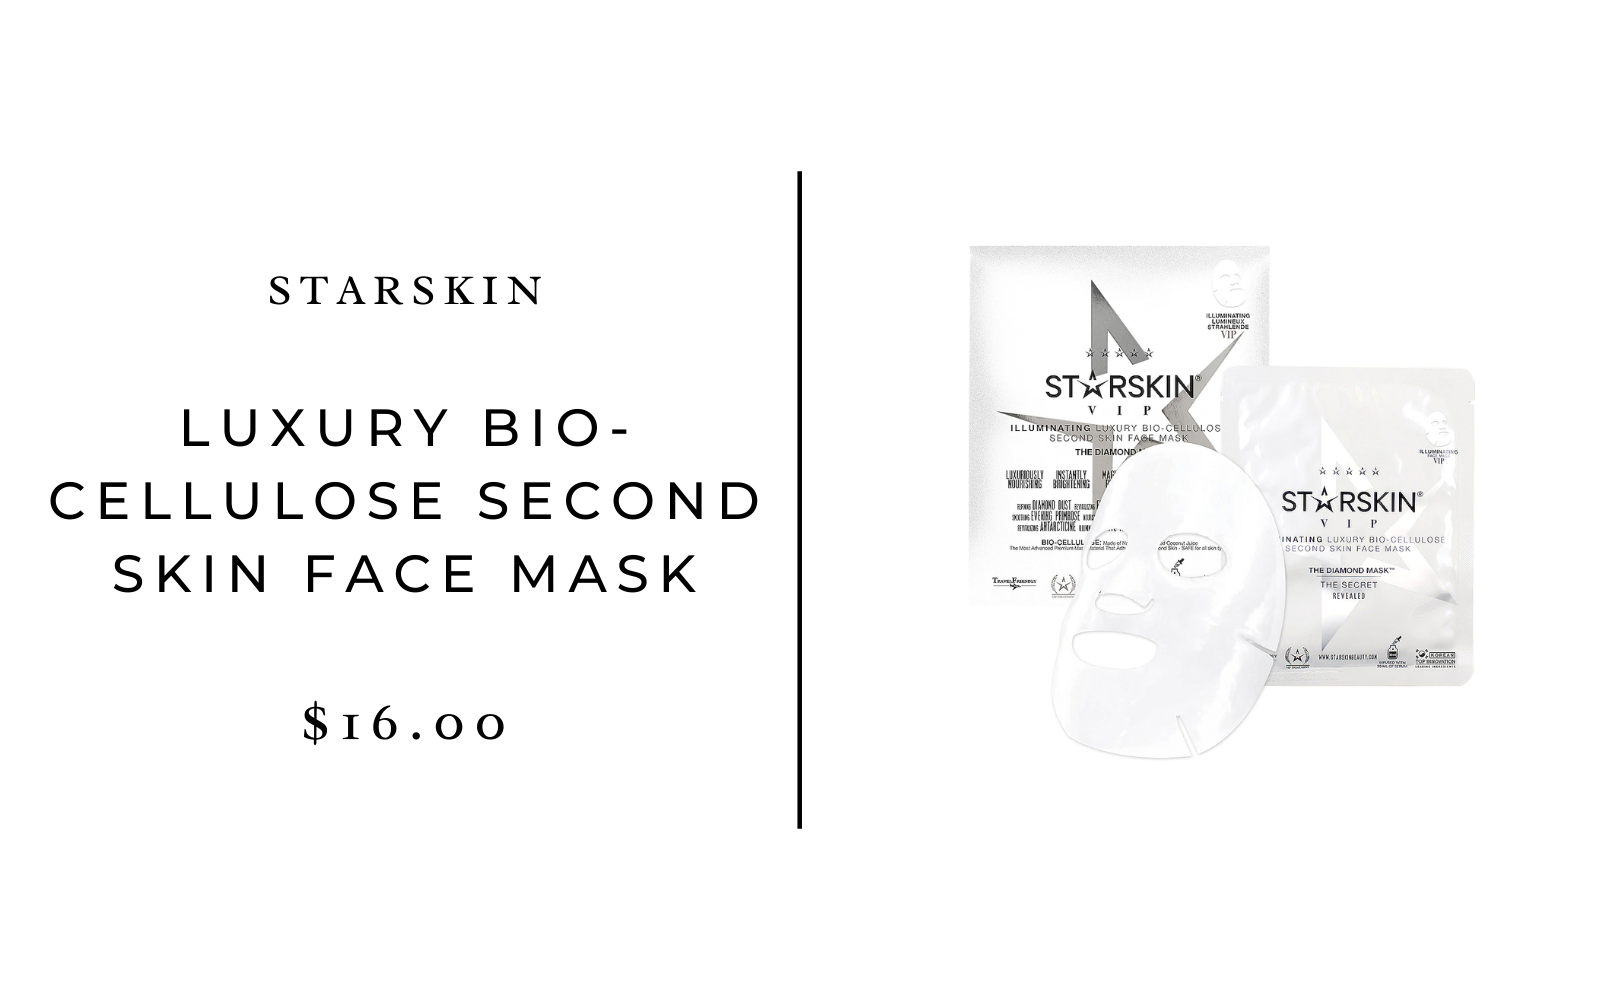 Starskin VIP The Diamond Mask Illuminating Luxury Bio-Cellulose Second Skin Face Mask